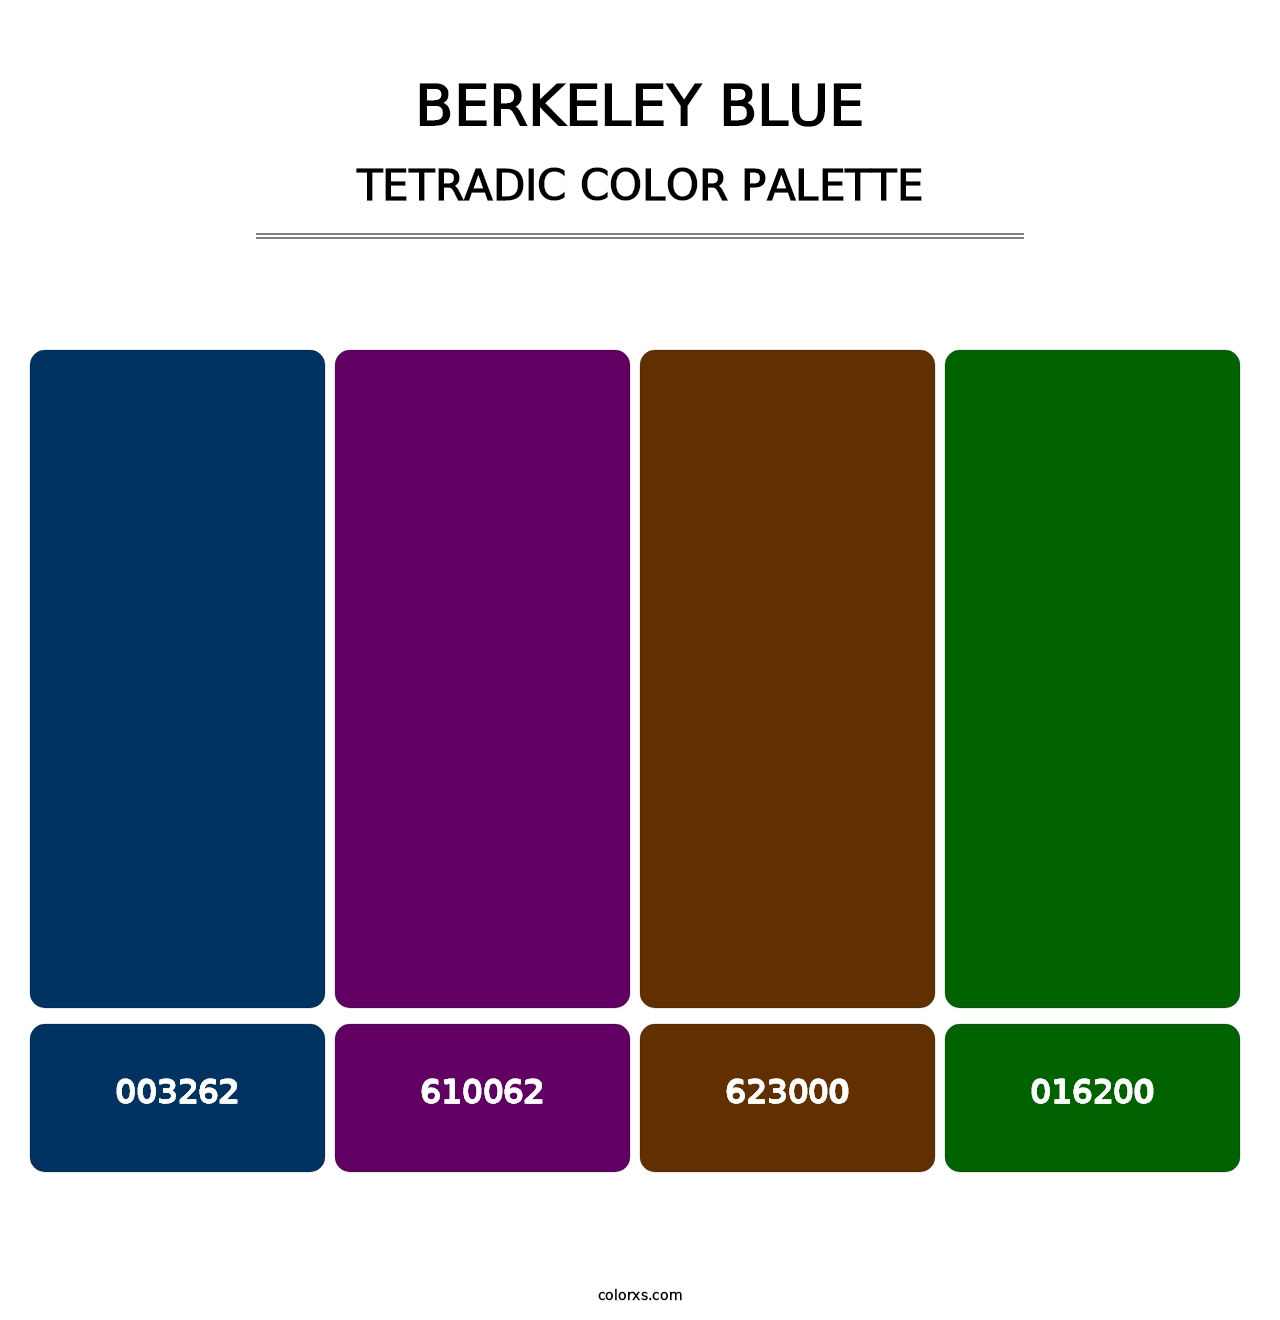 Berkeley Blue - Tetradic Color Palette